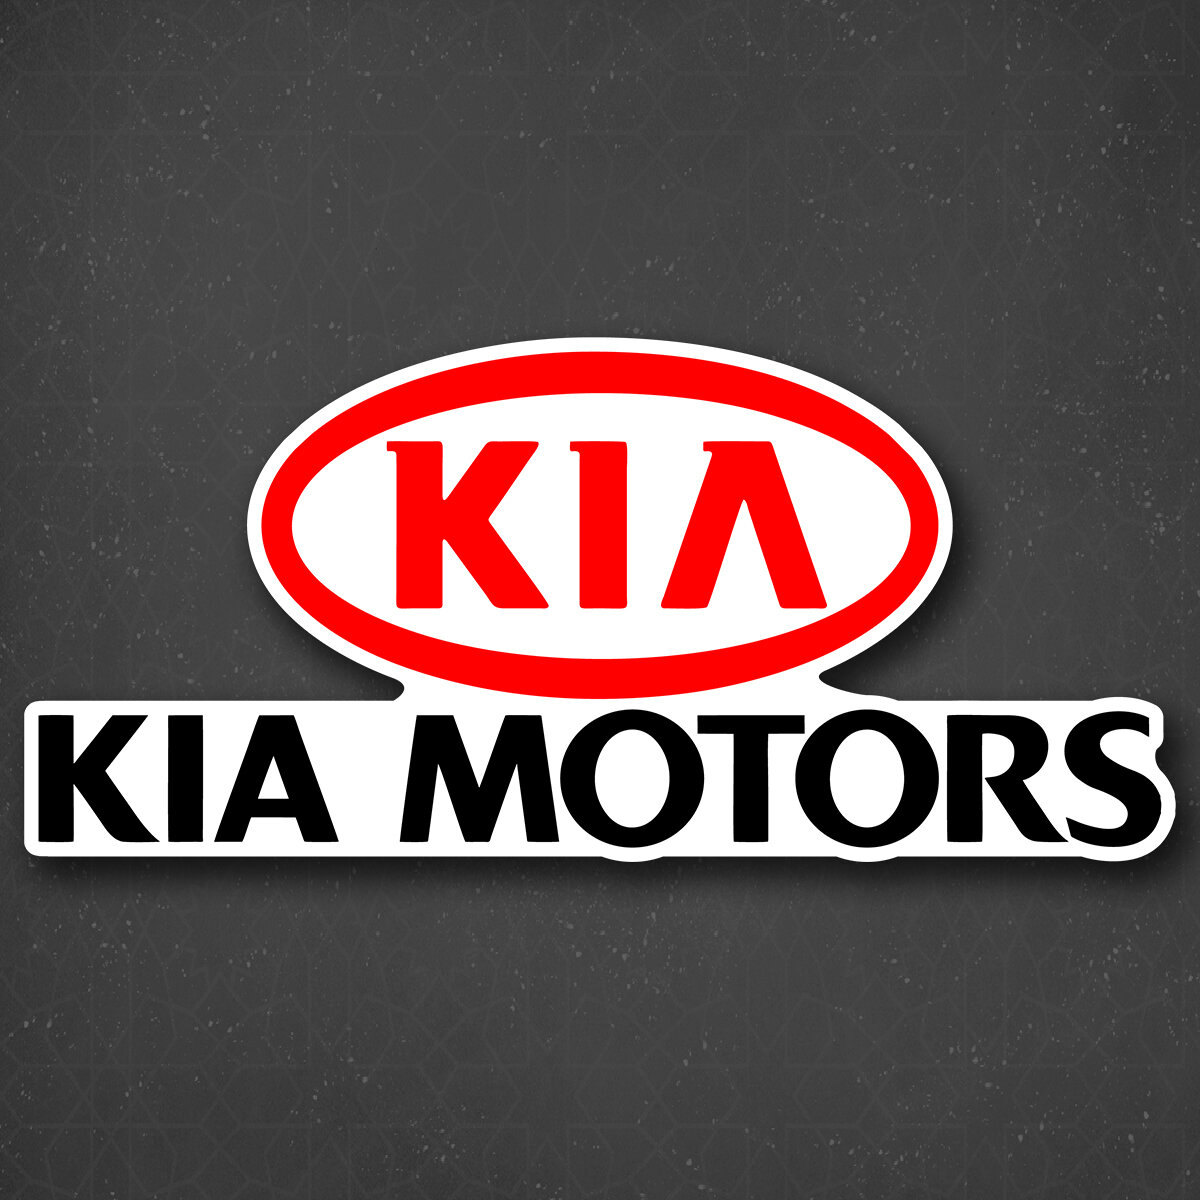 Наклейка на авто "KIA MOTORS - КИА моторс" 24x10 см